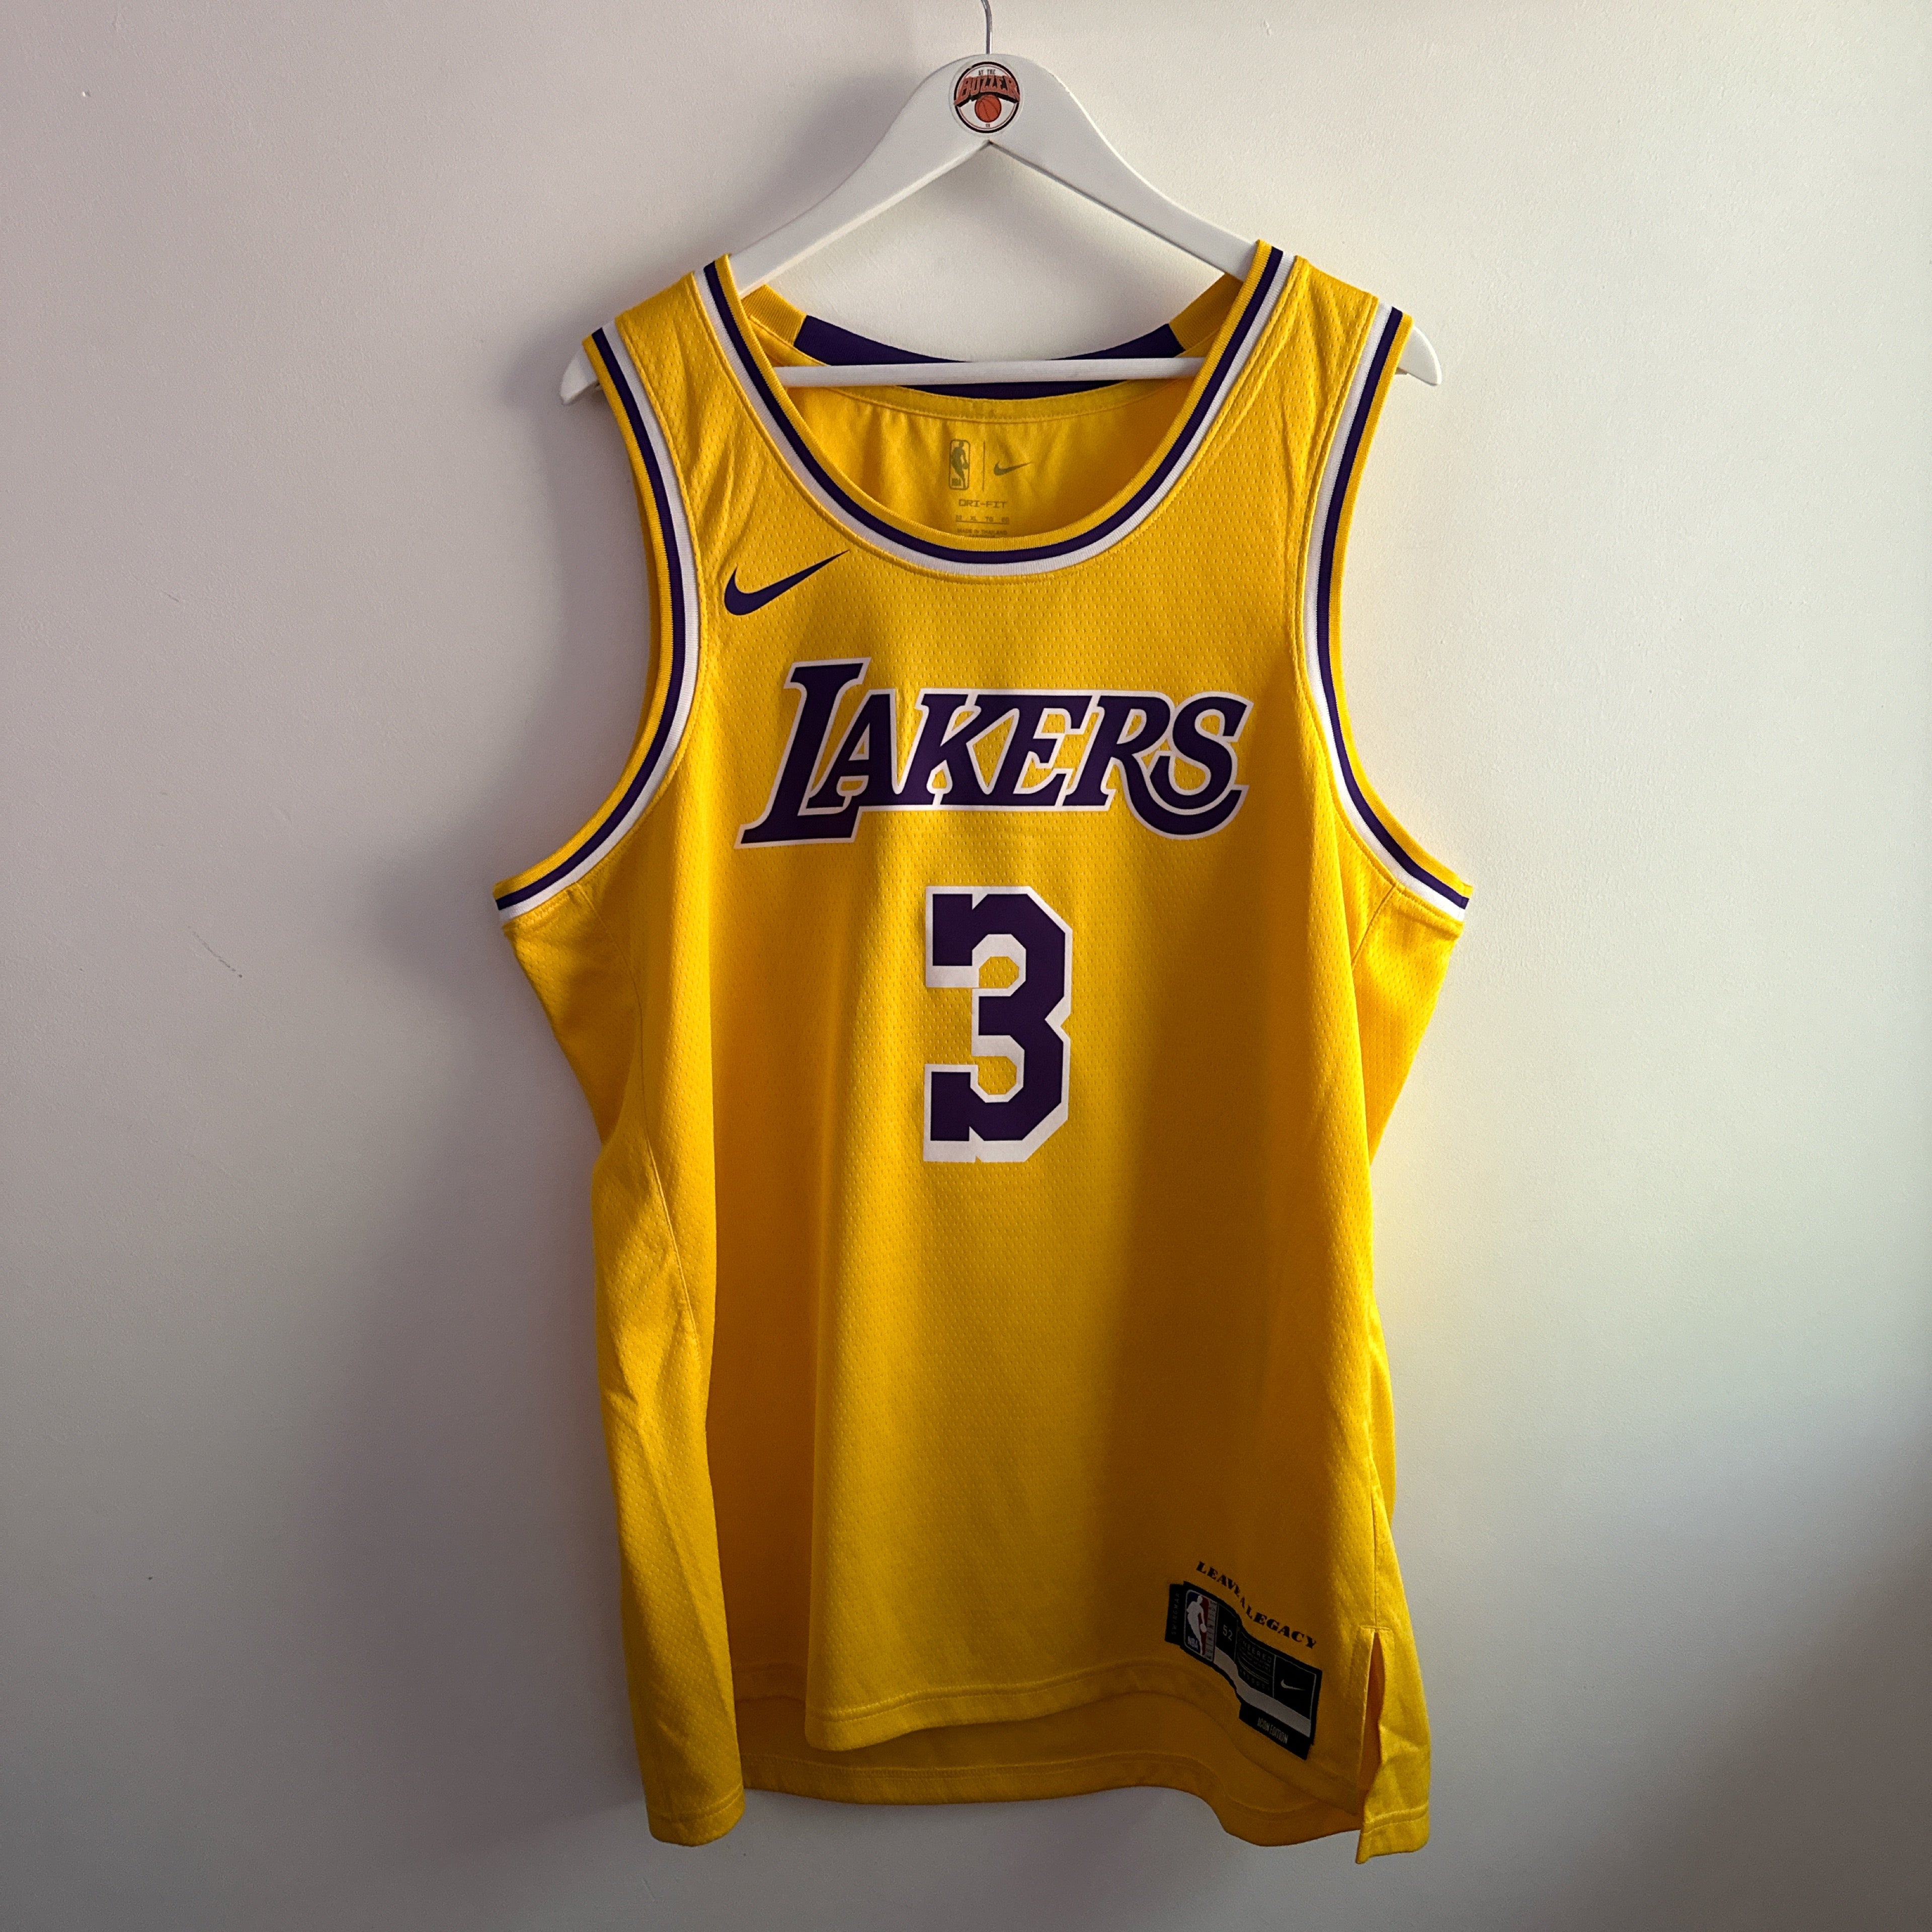 Los Angeles Lakers Anthony Davis Nike jersey - XL